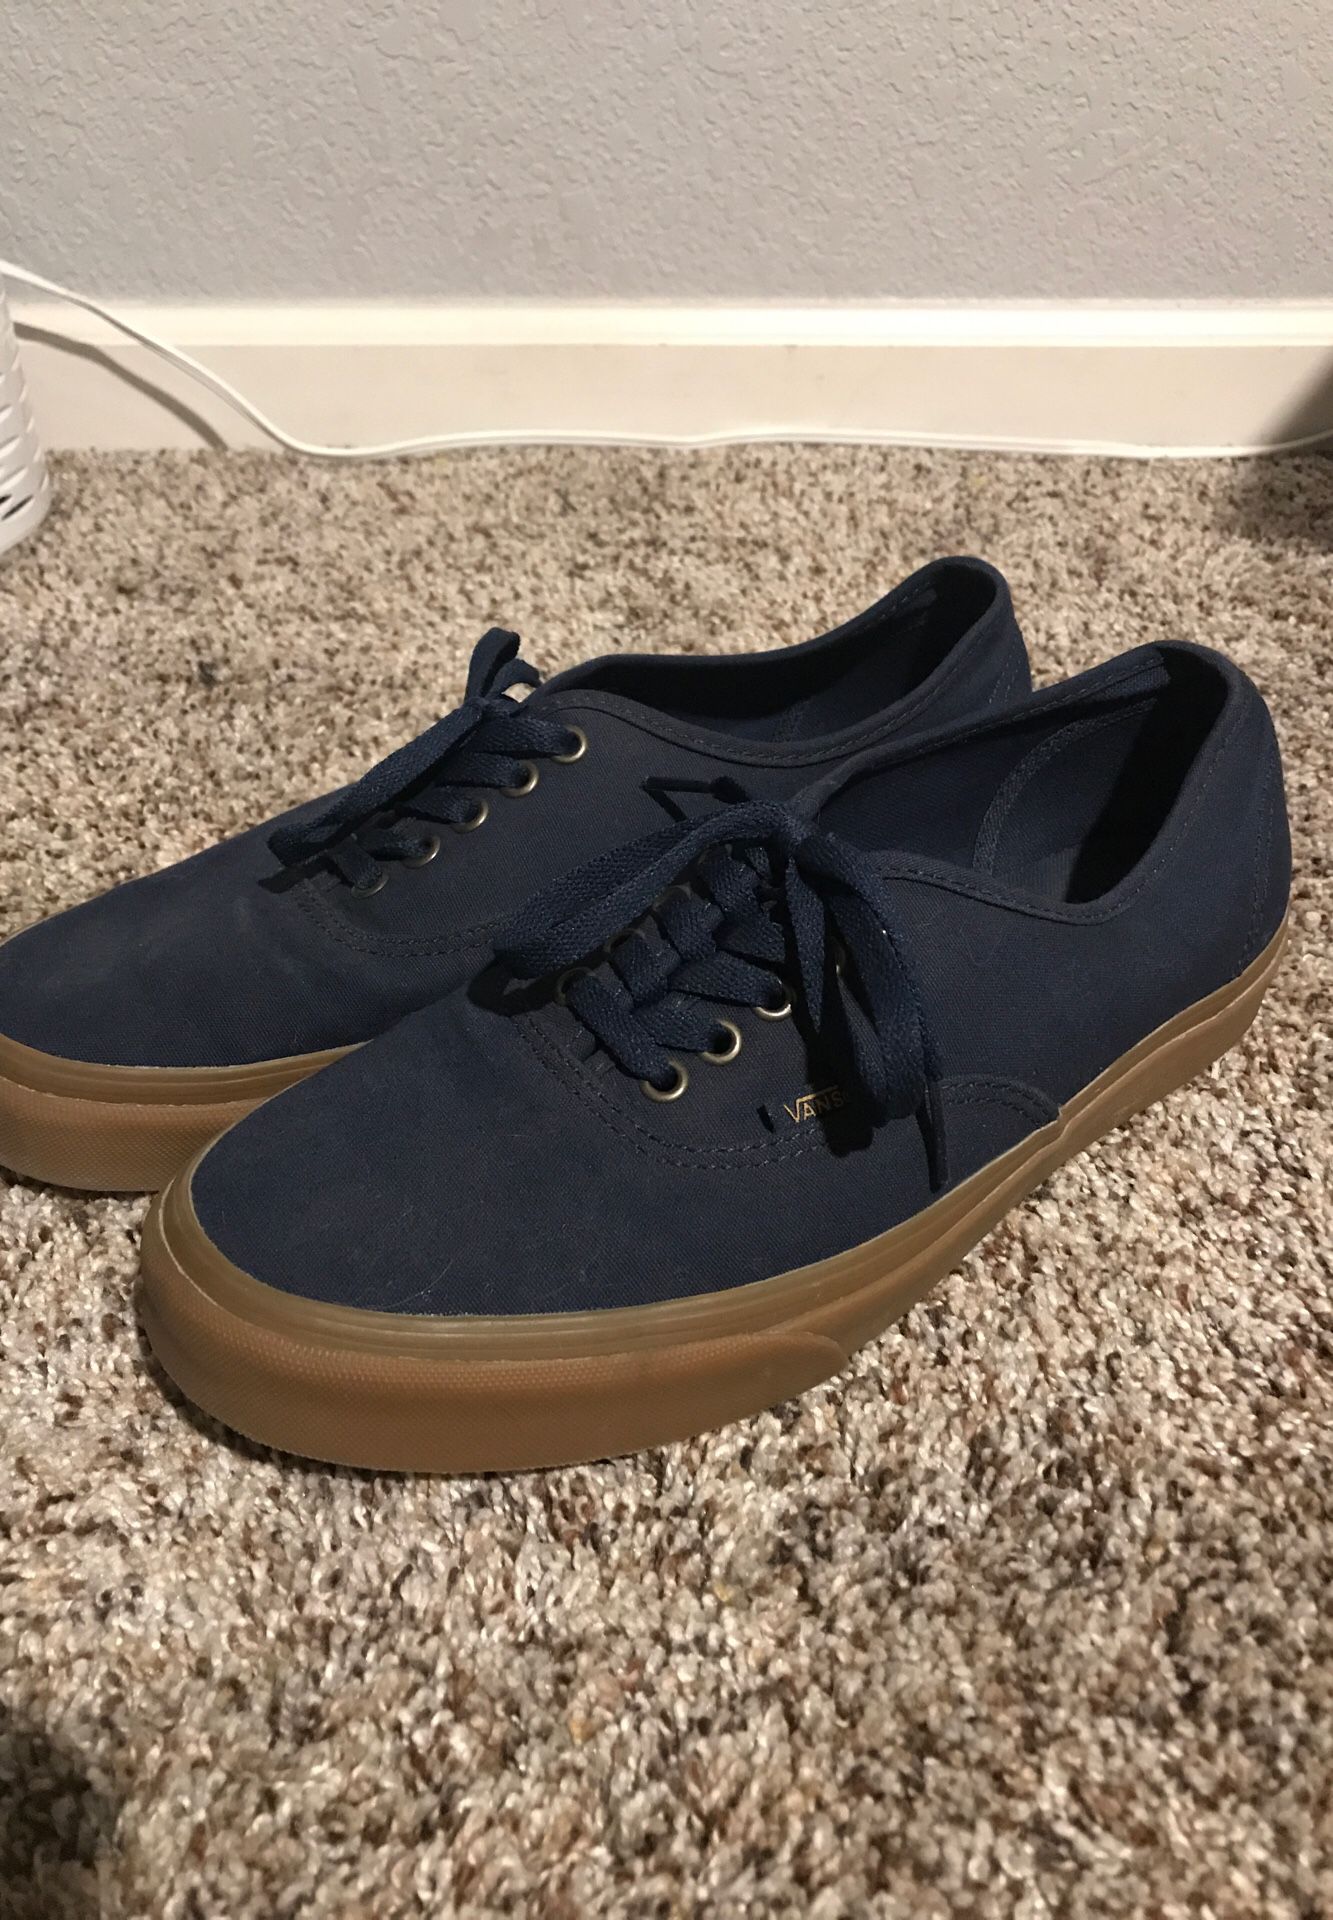 Vans 10 dark blue shoes